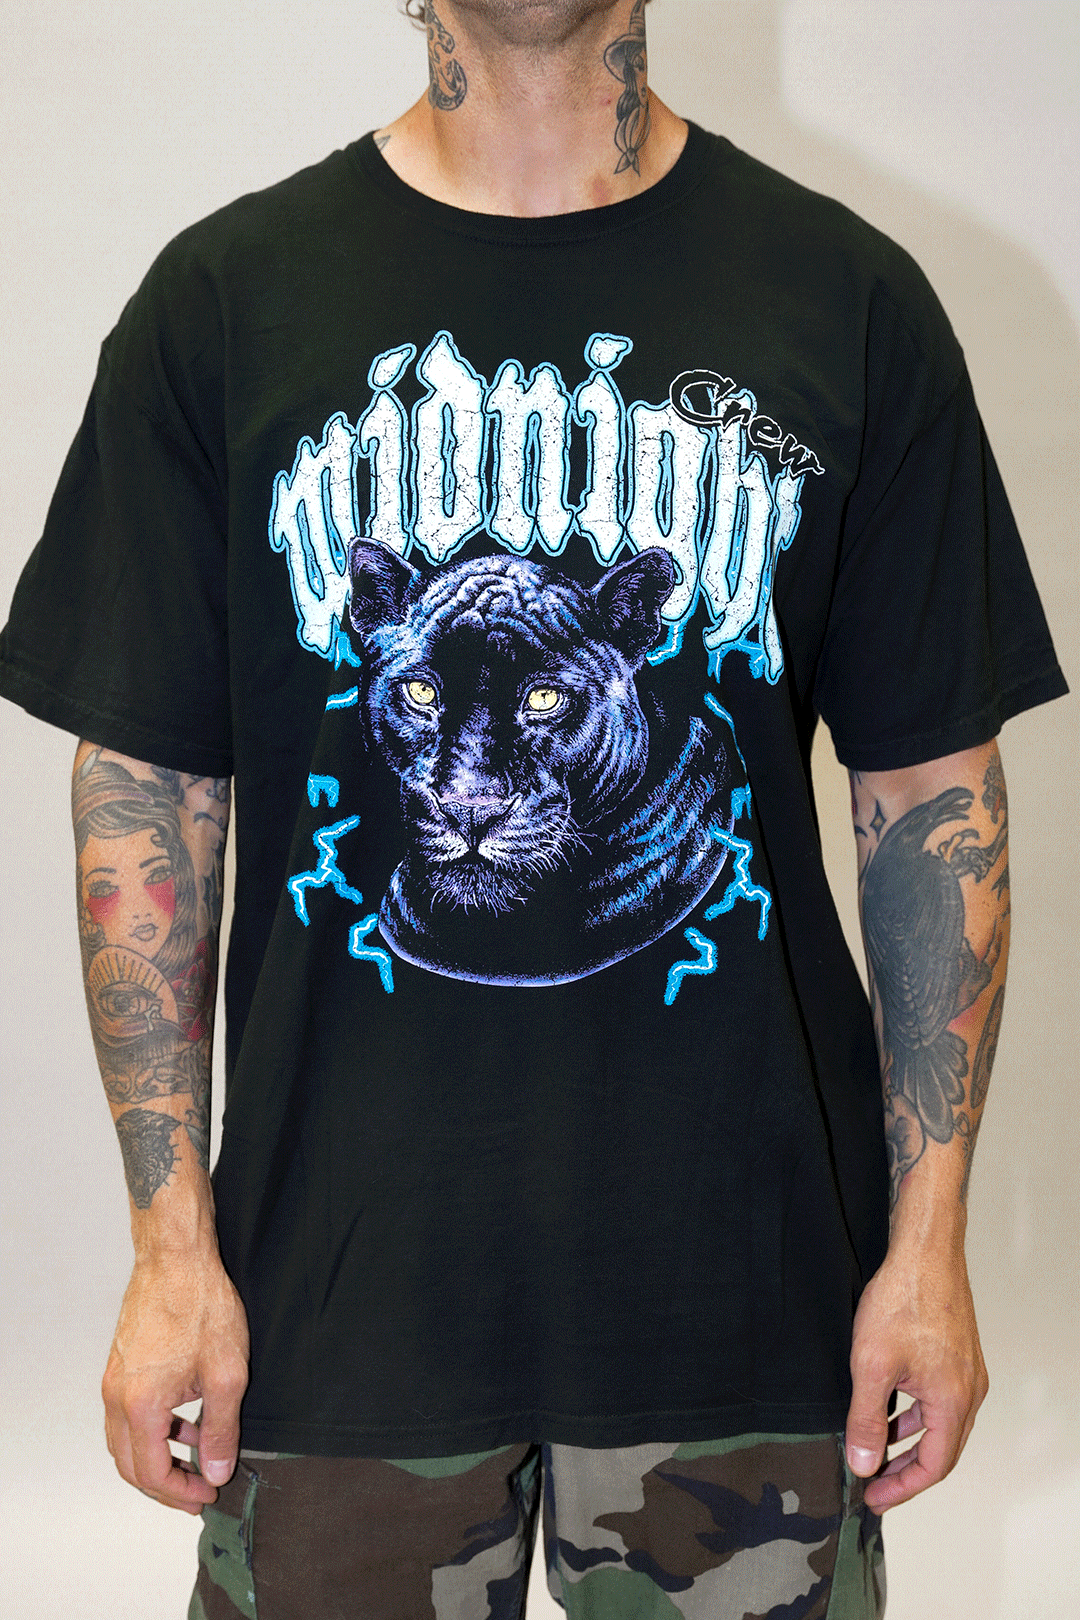 Midnight Crew Vintage T-Shirt